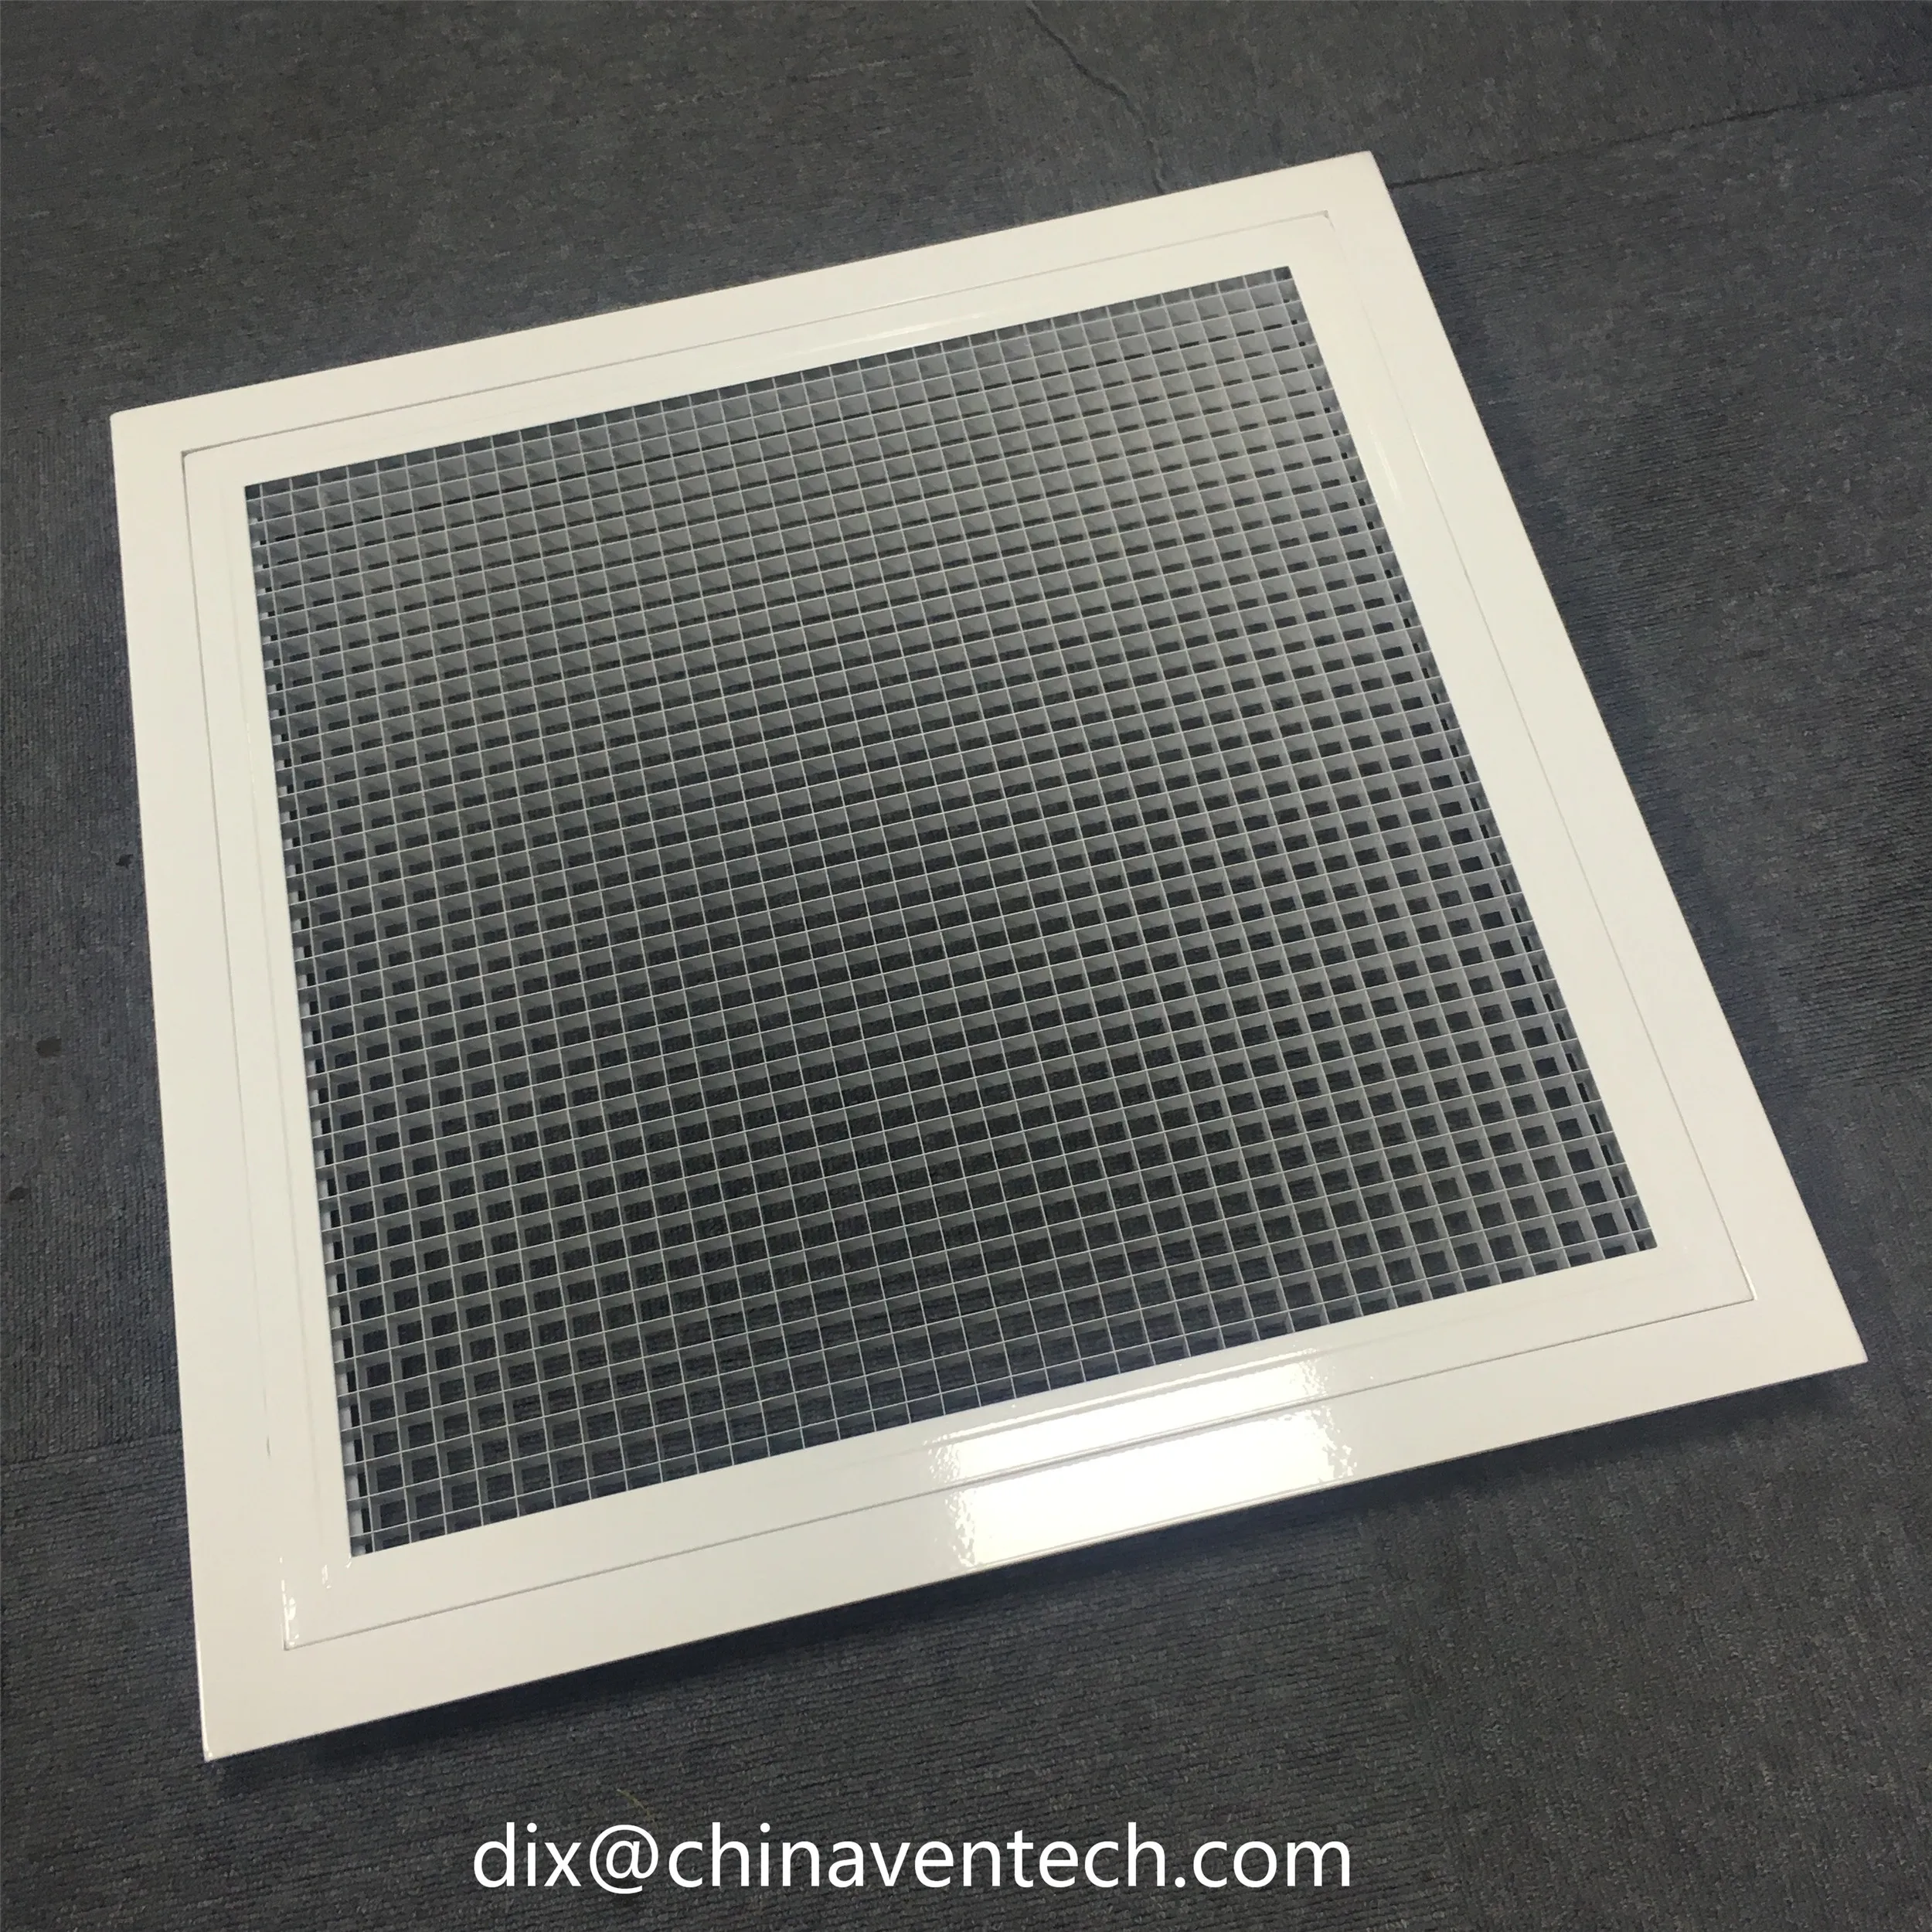 Ventech free sample ventilation egg crate square return air grille